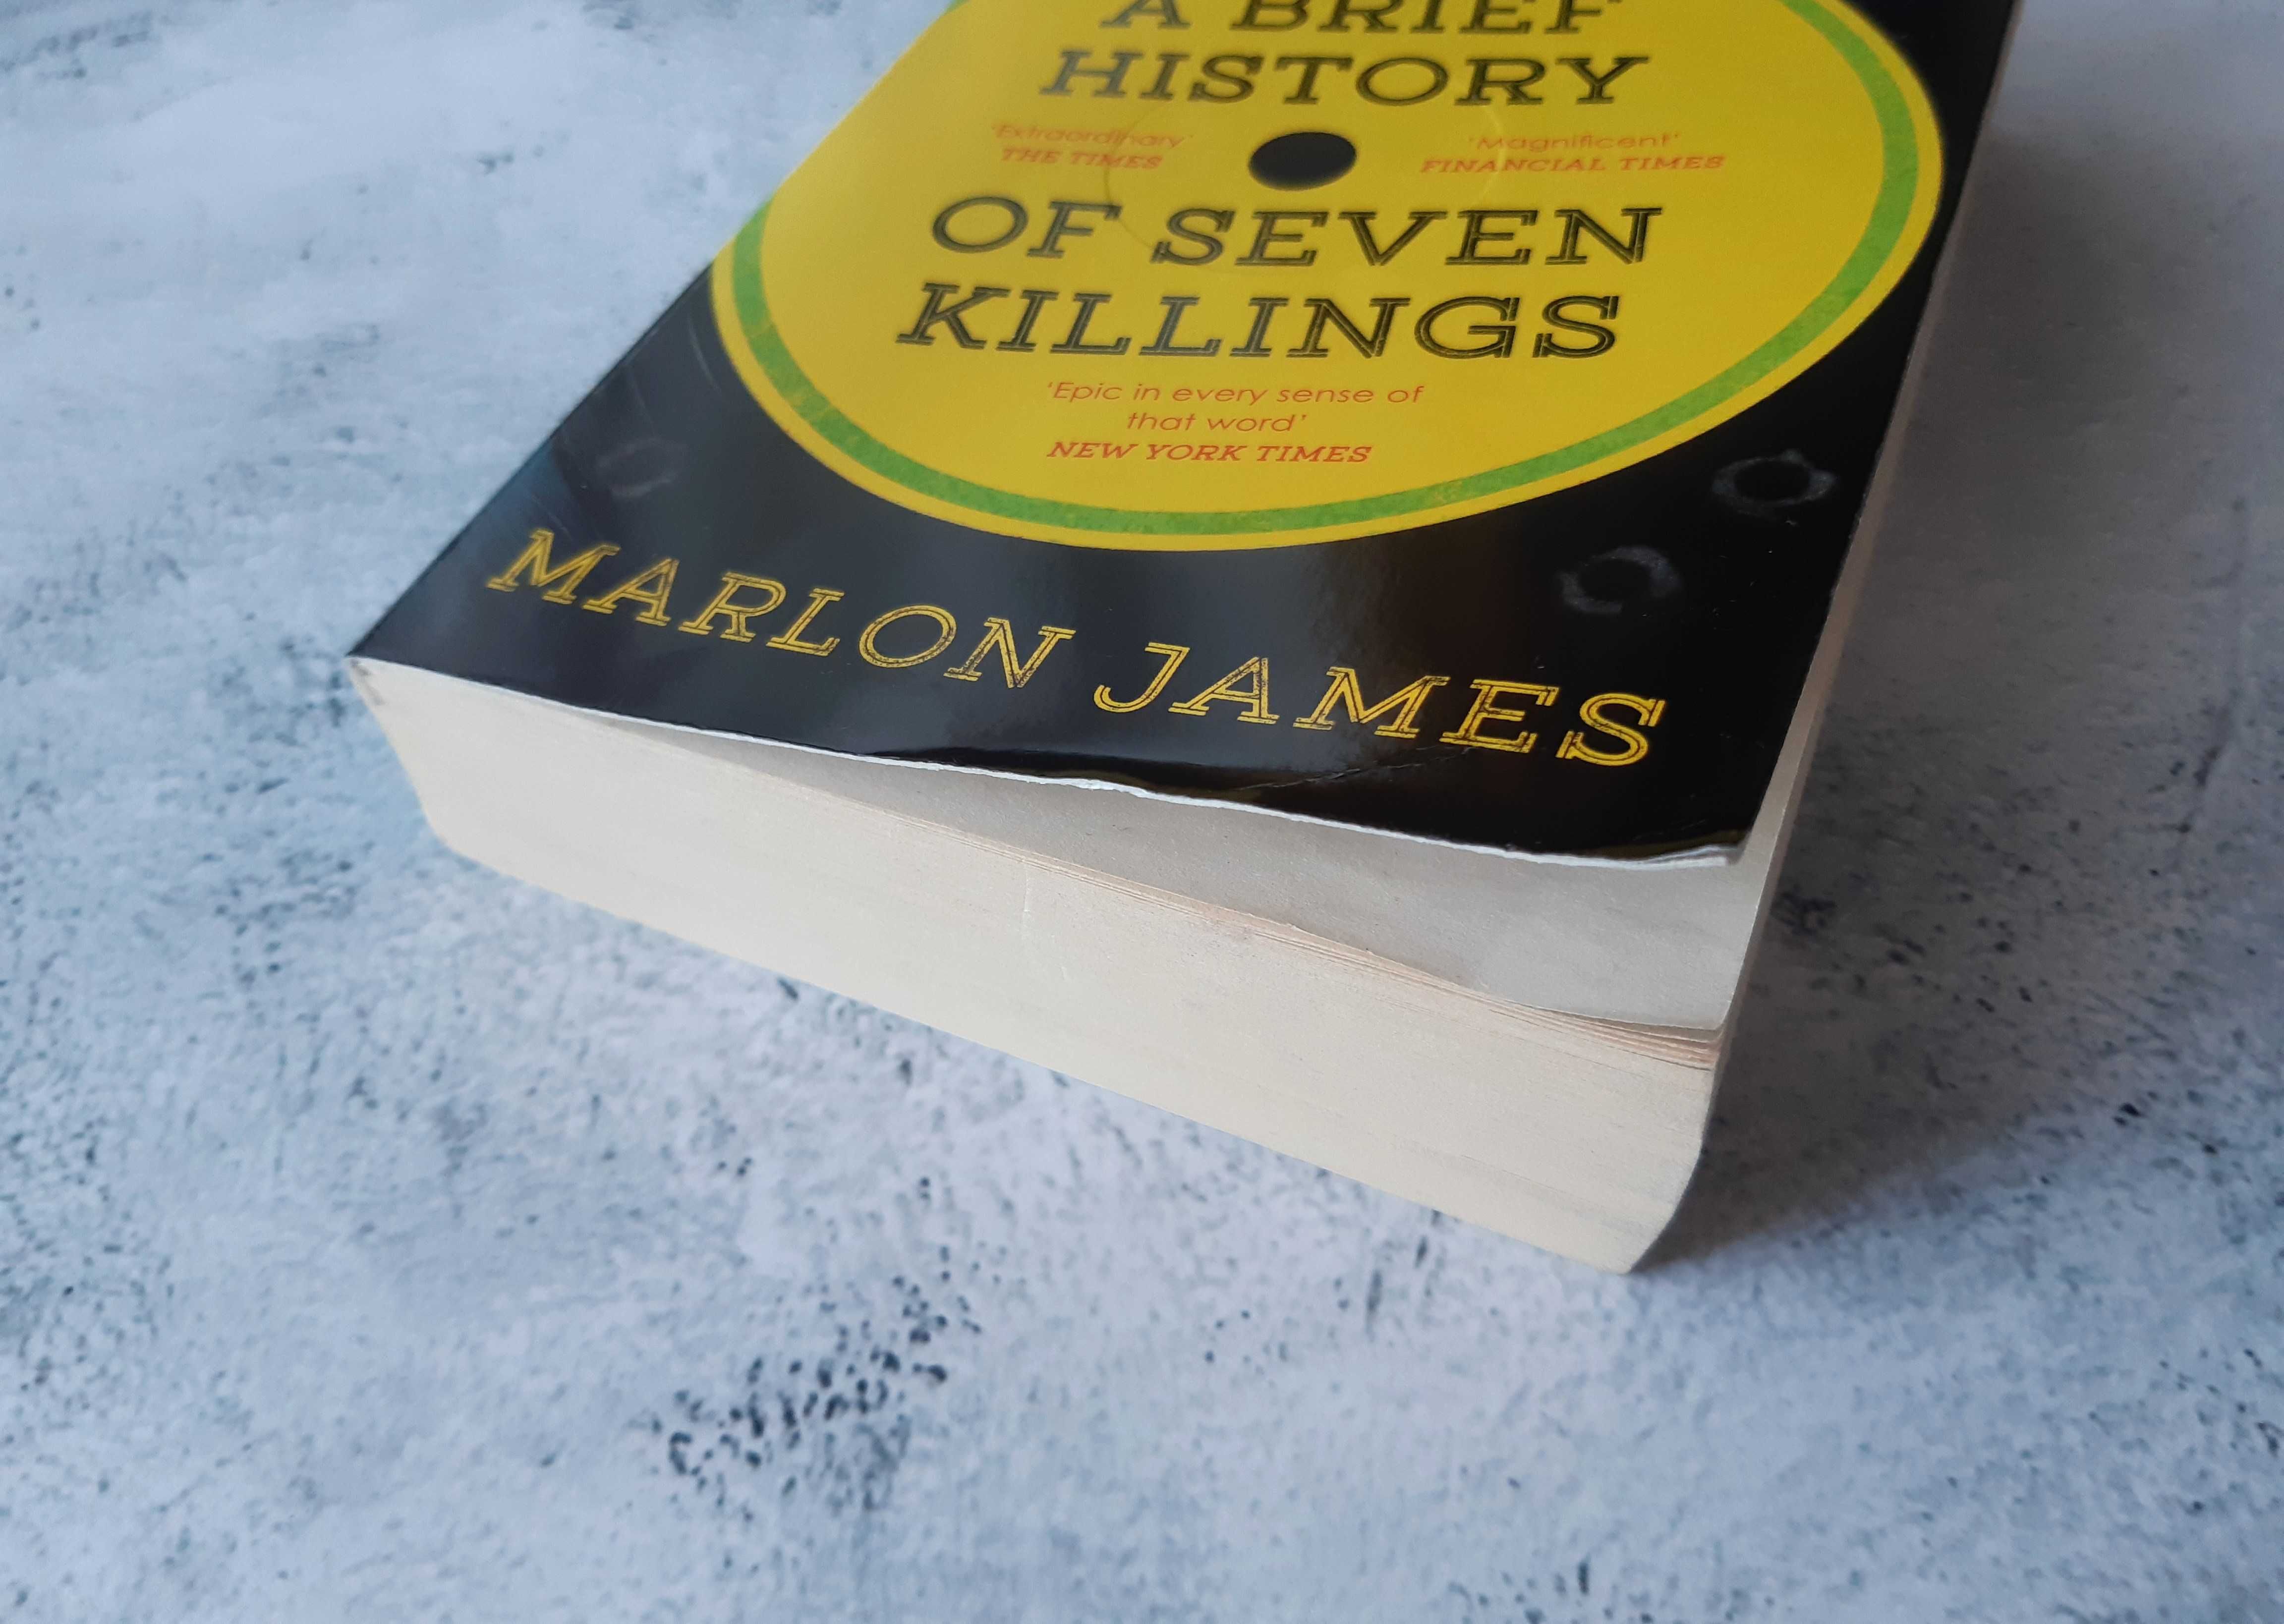 A Brief History of Seven Killings Marlon James